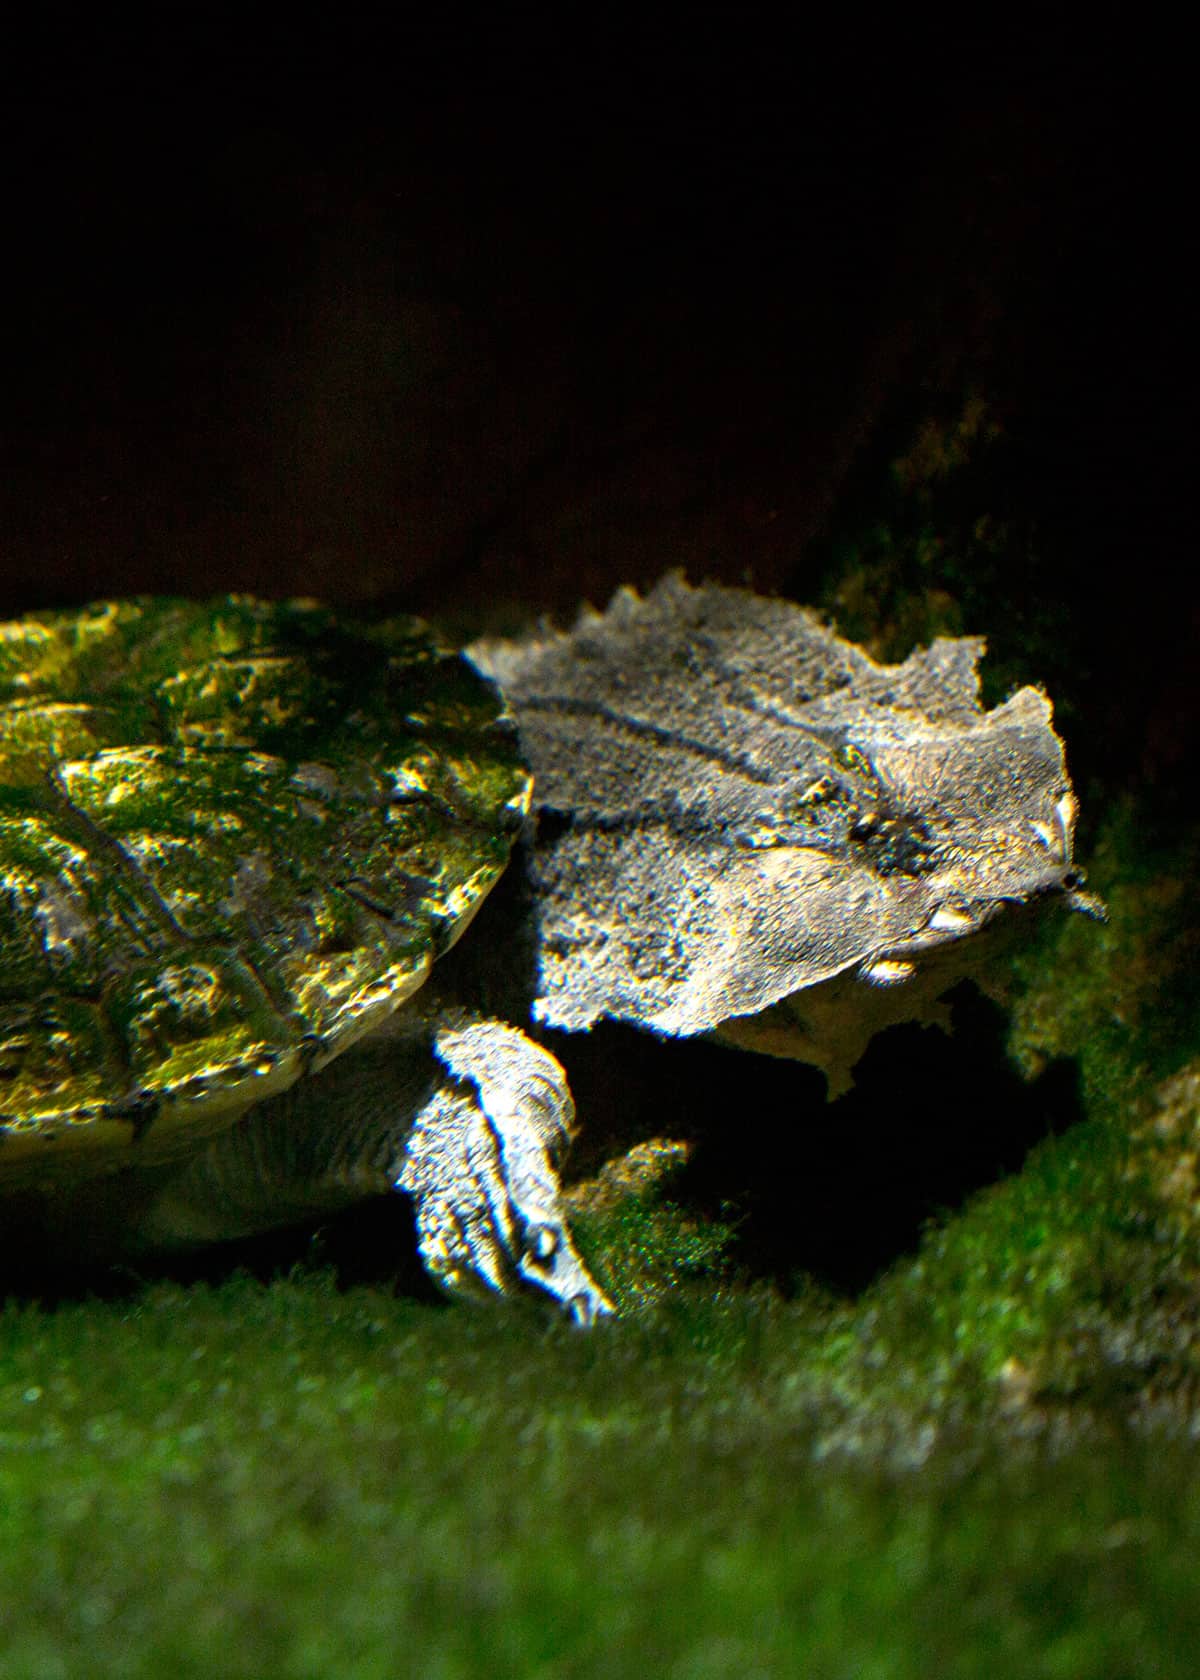 Facts about matamata turtles